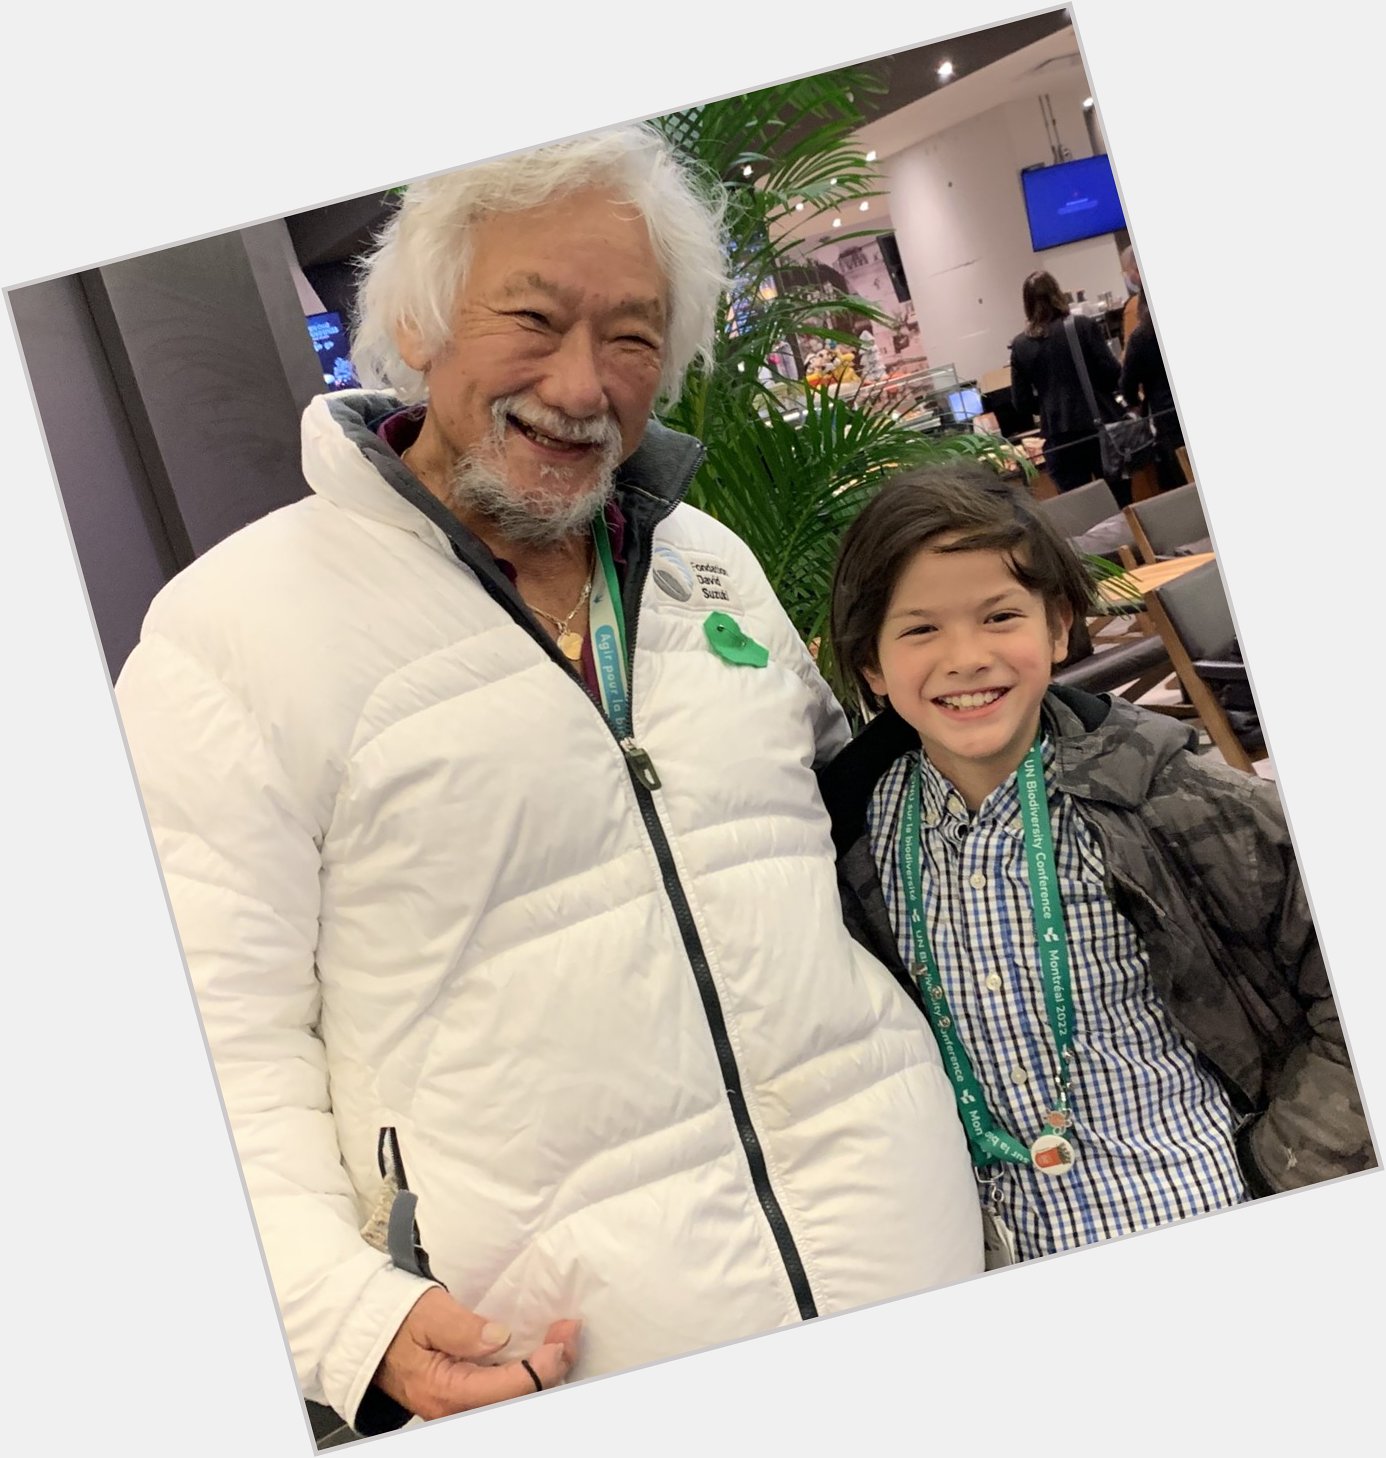  Happy Birthday David Suzuki! So nice meeting you at COP15! 